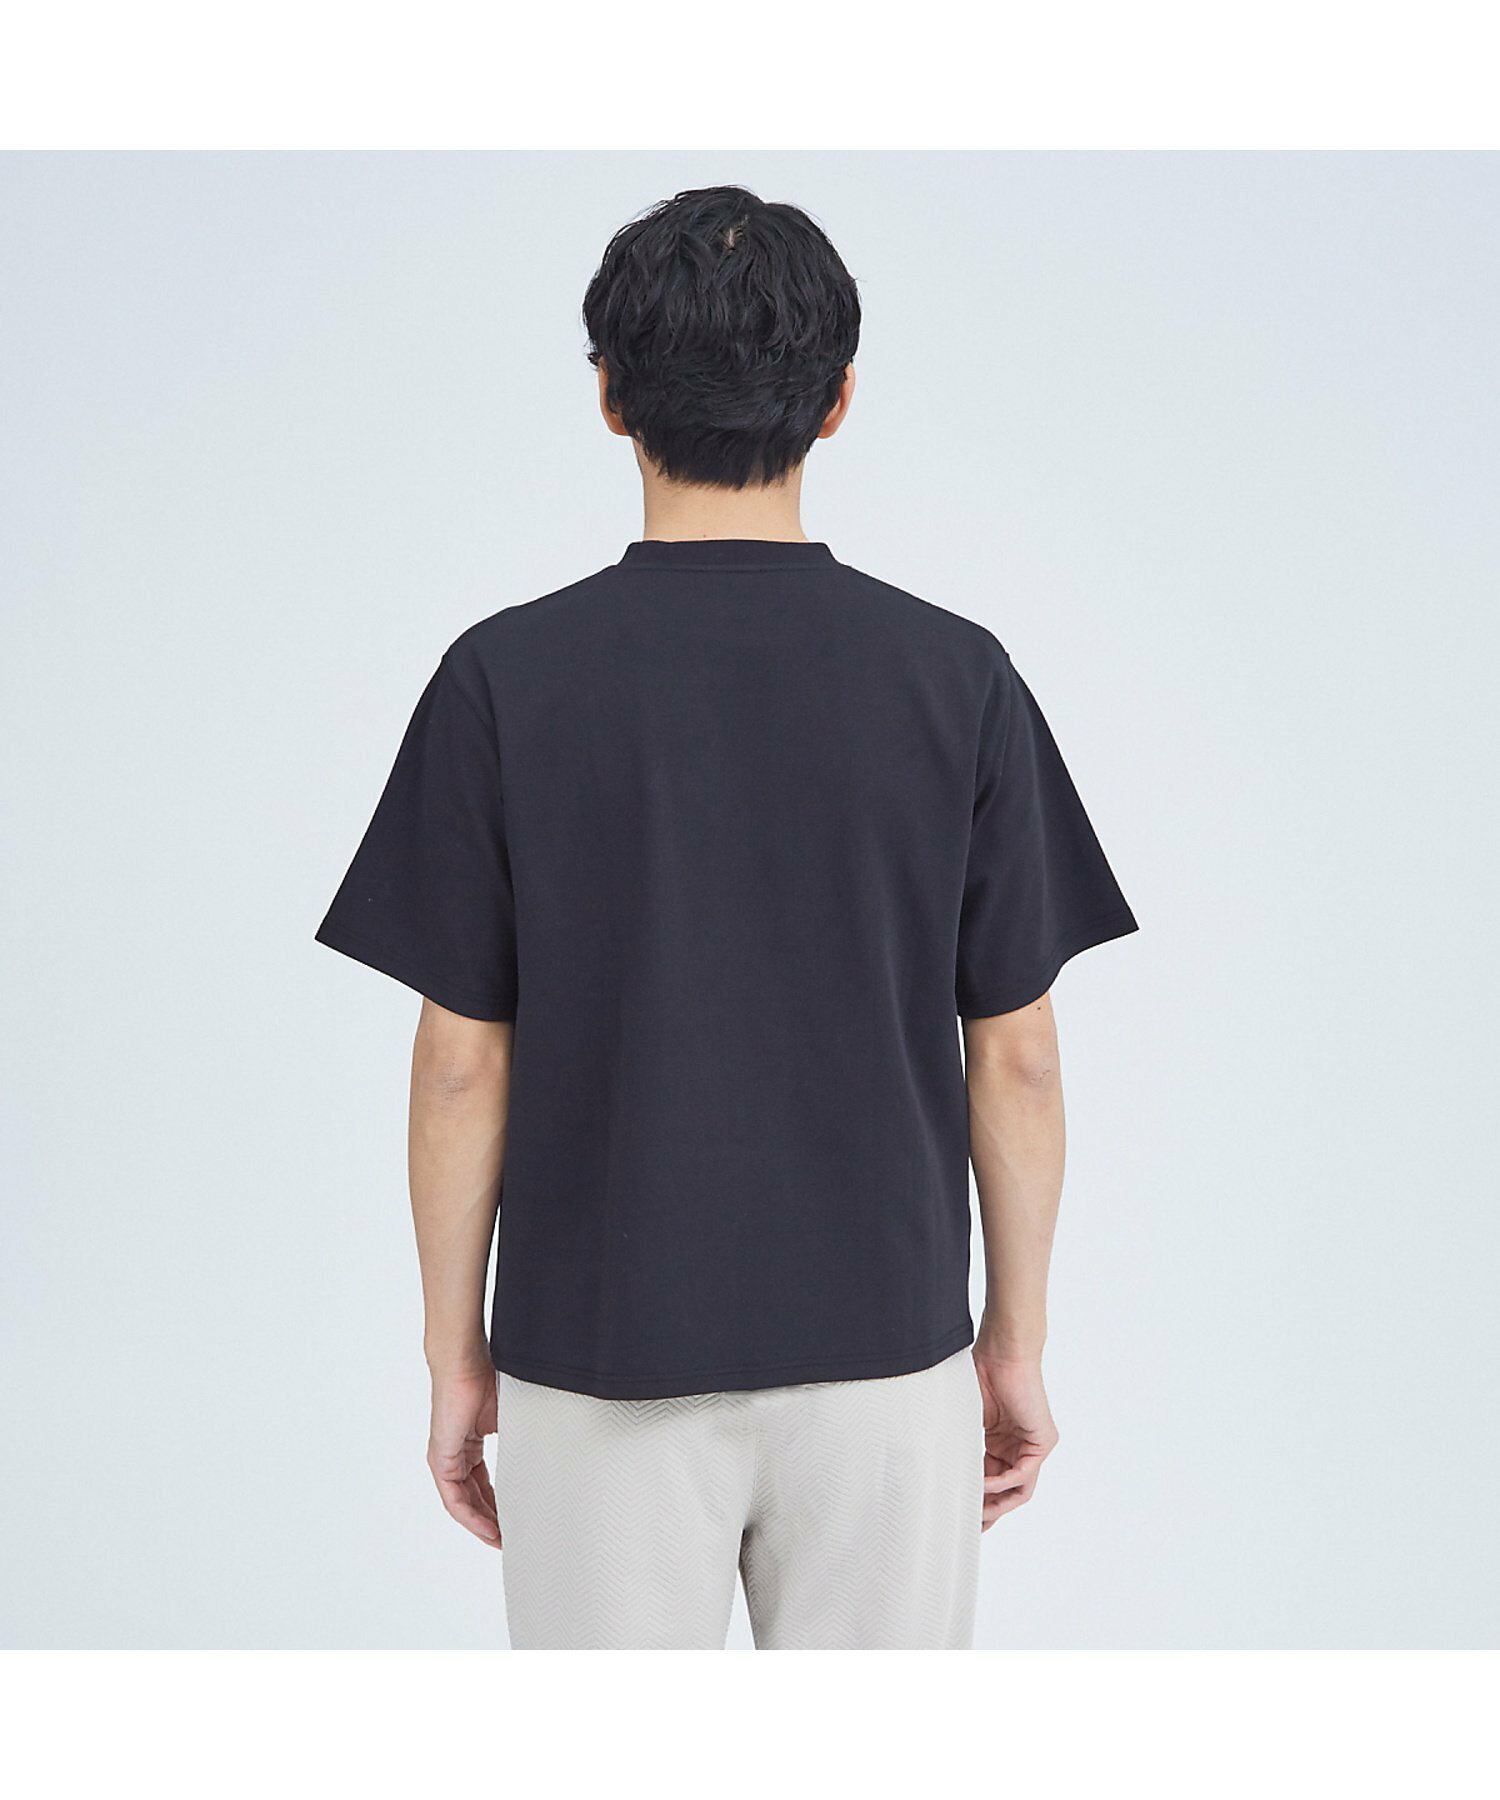 【ADONE】ベアポンチ ロゴ 半袖Tシャツ